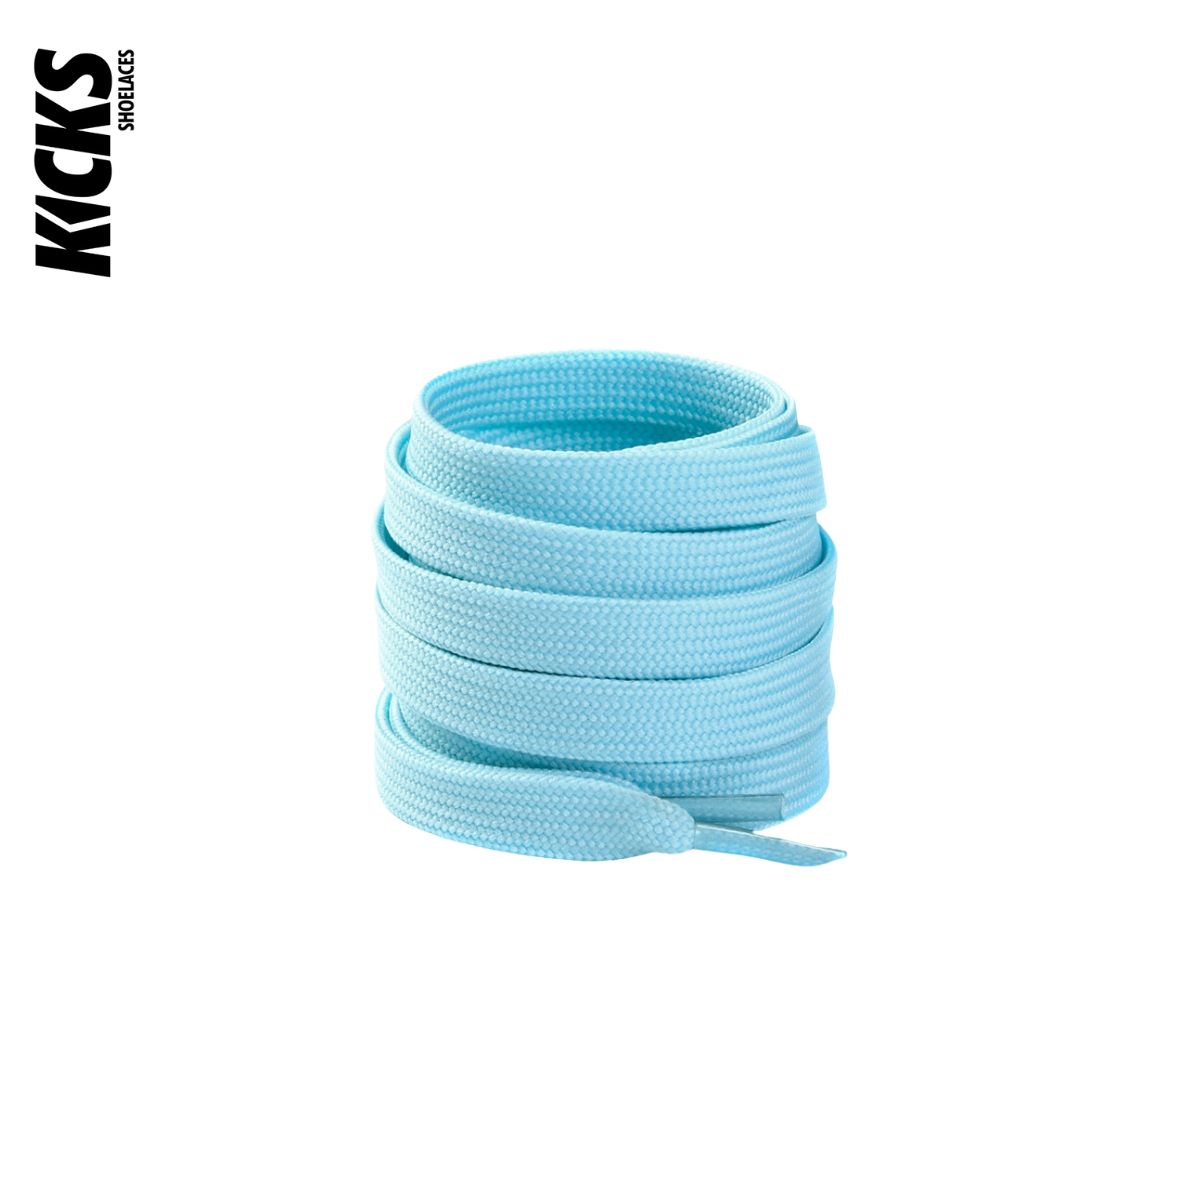 Light Blue Nike Dunks Shoelace Replacements - Kicks Shoelaces